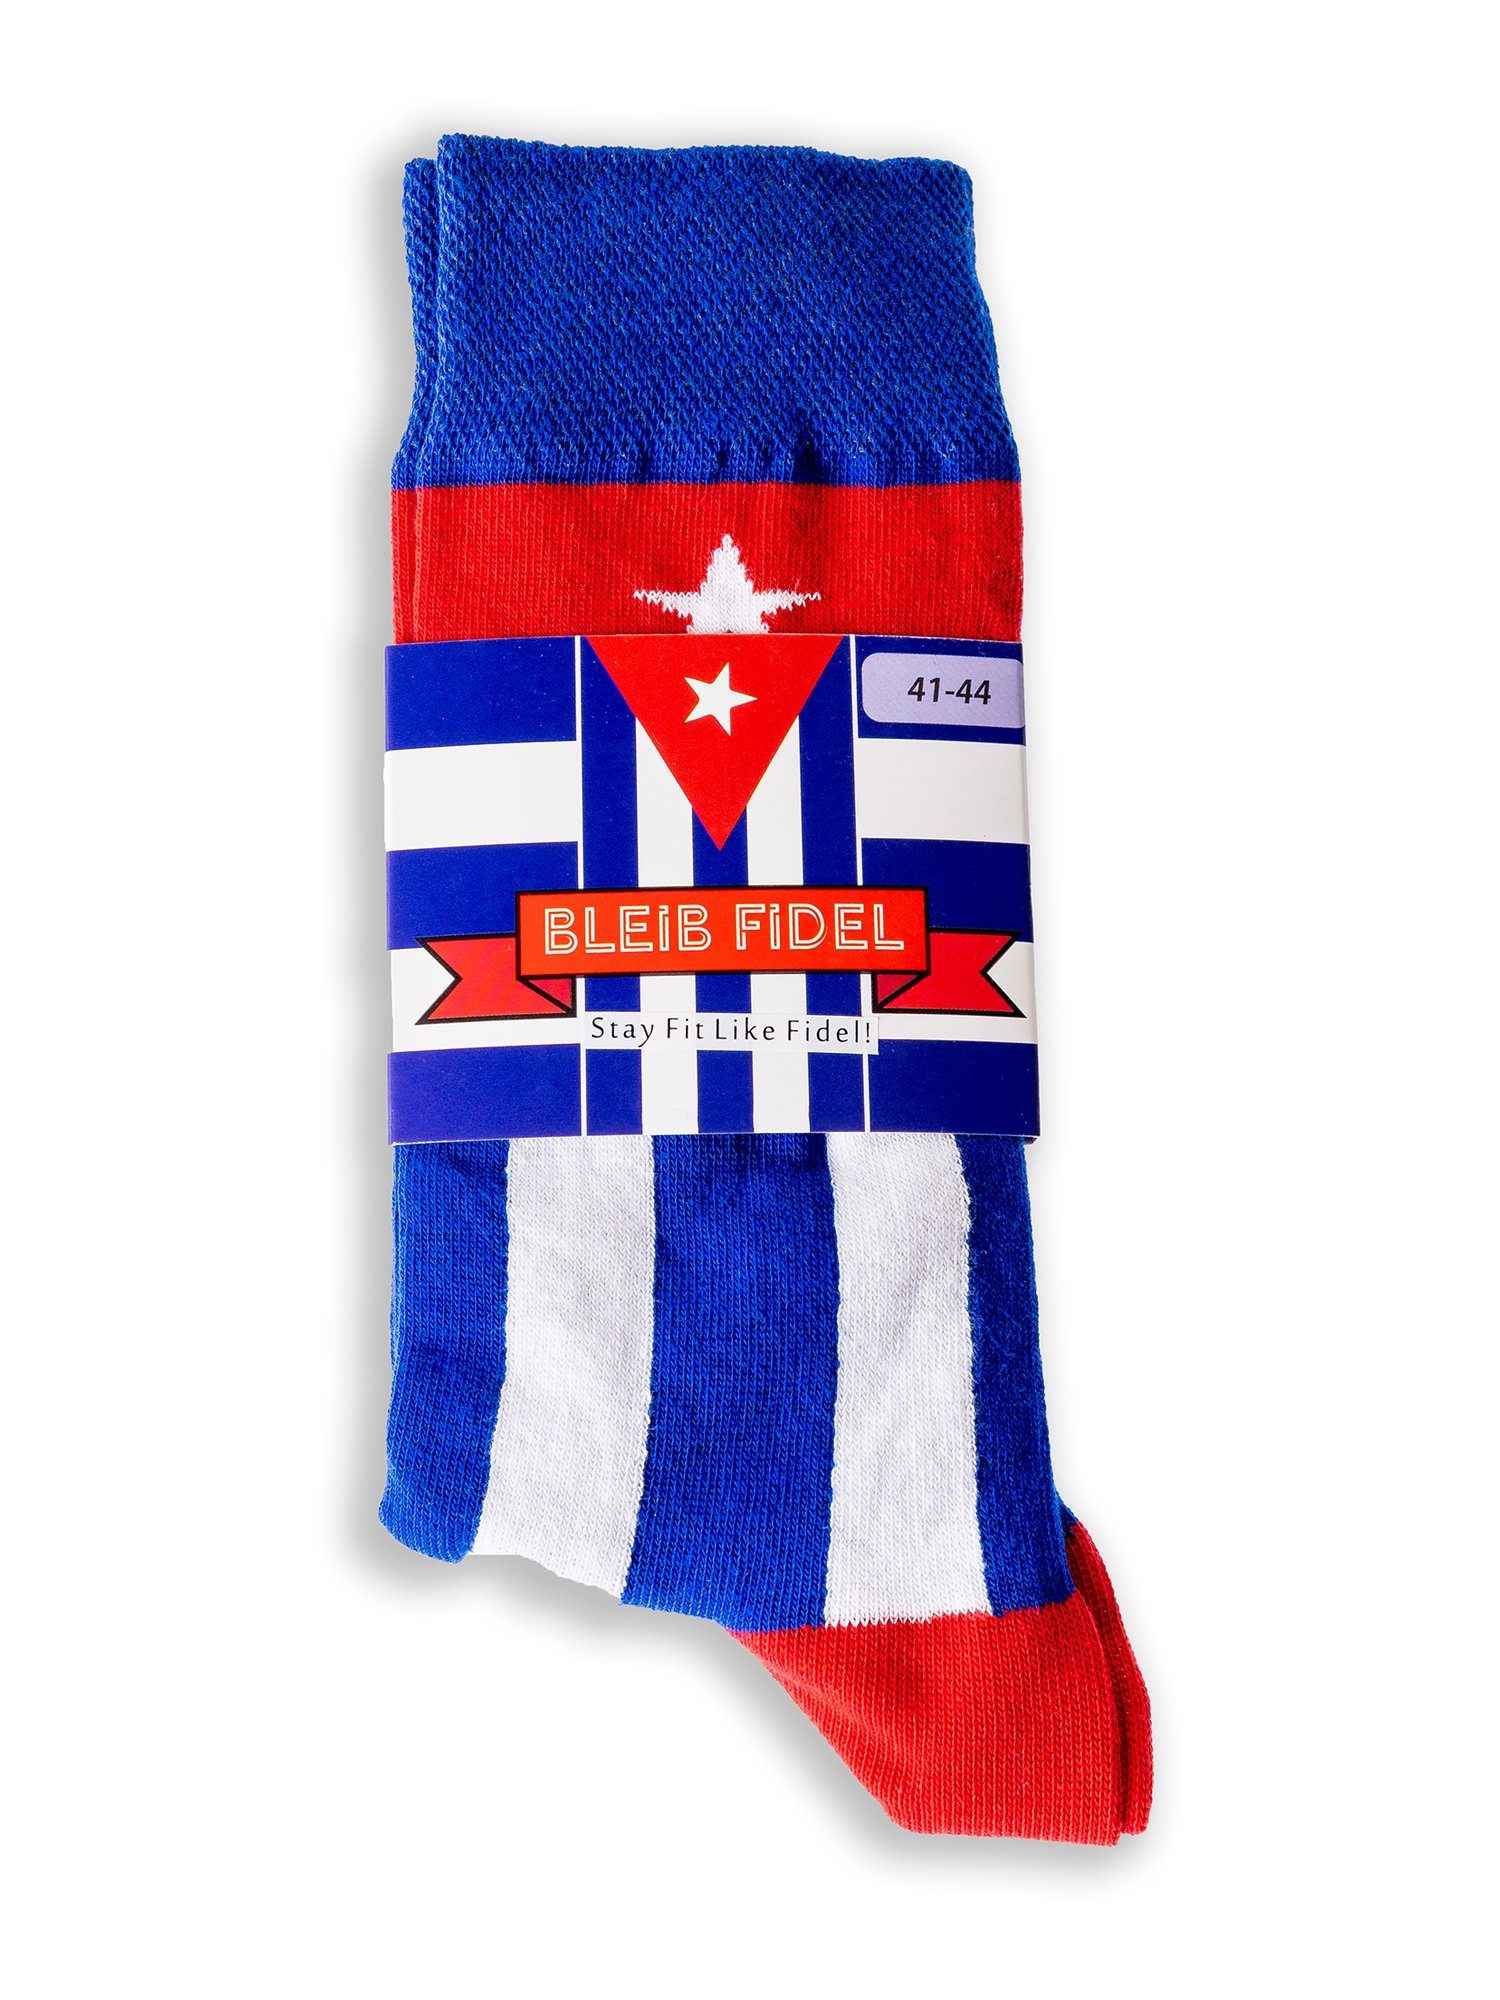 Freizeitsocken Banderole Lifestyle Fidel Socks Chili Leisure